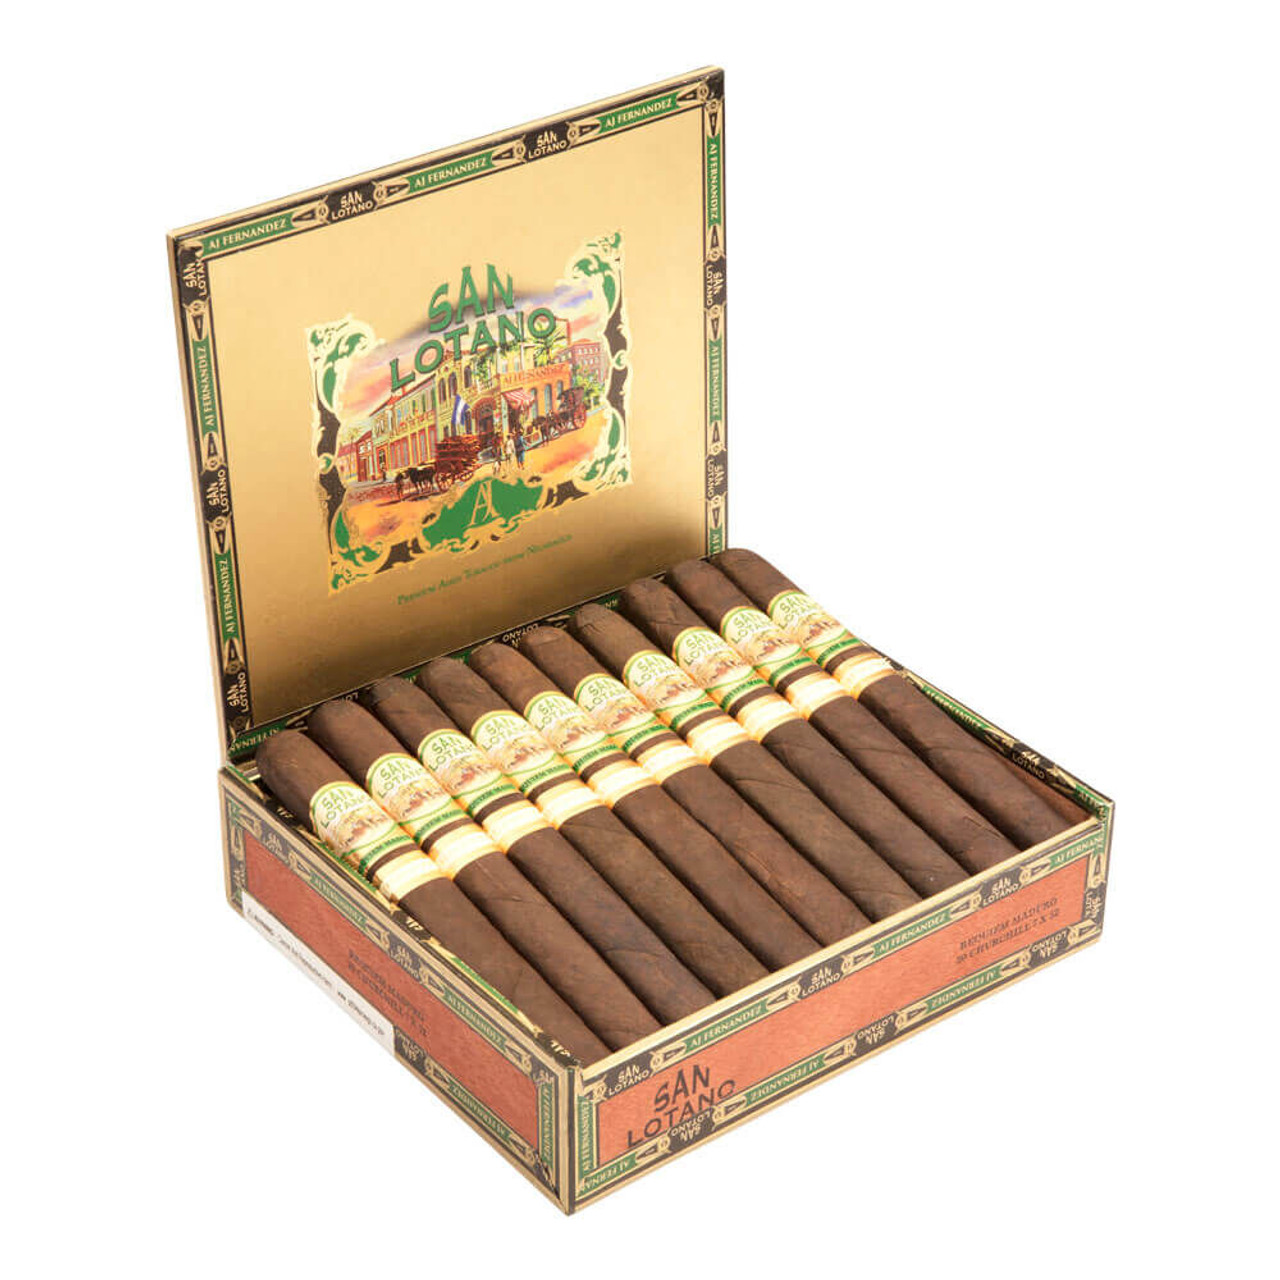 AJ Fernandez San Lotano Requiem Maduro Churchill Cigars - 7 x 52 (Box of 20) Open